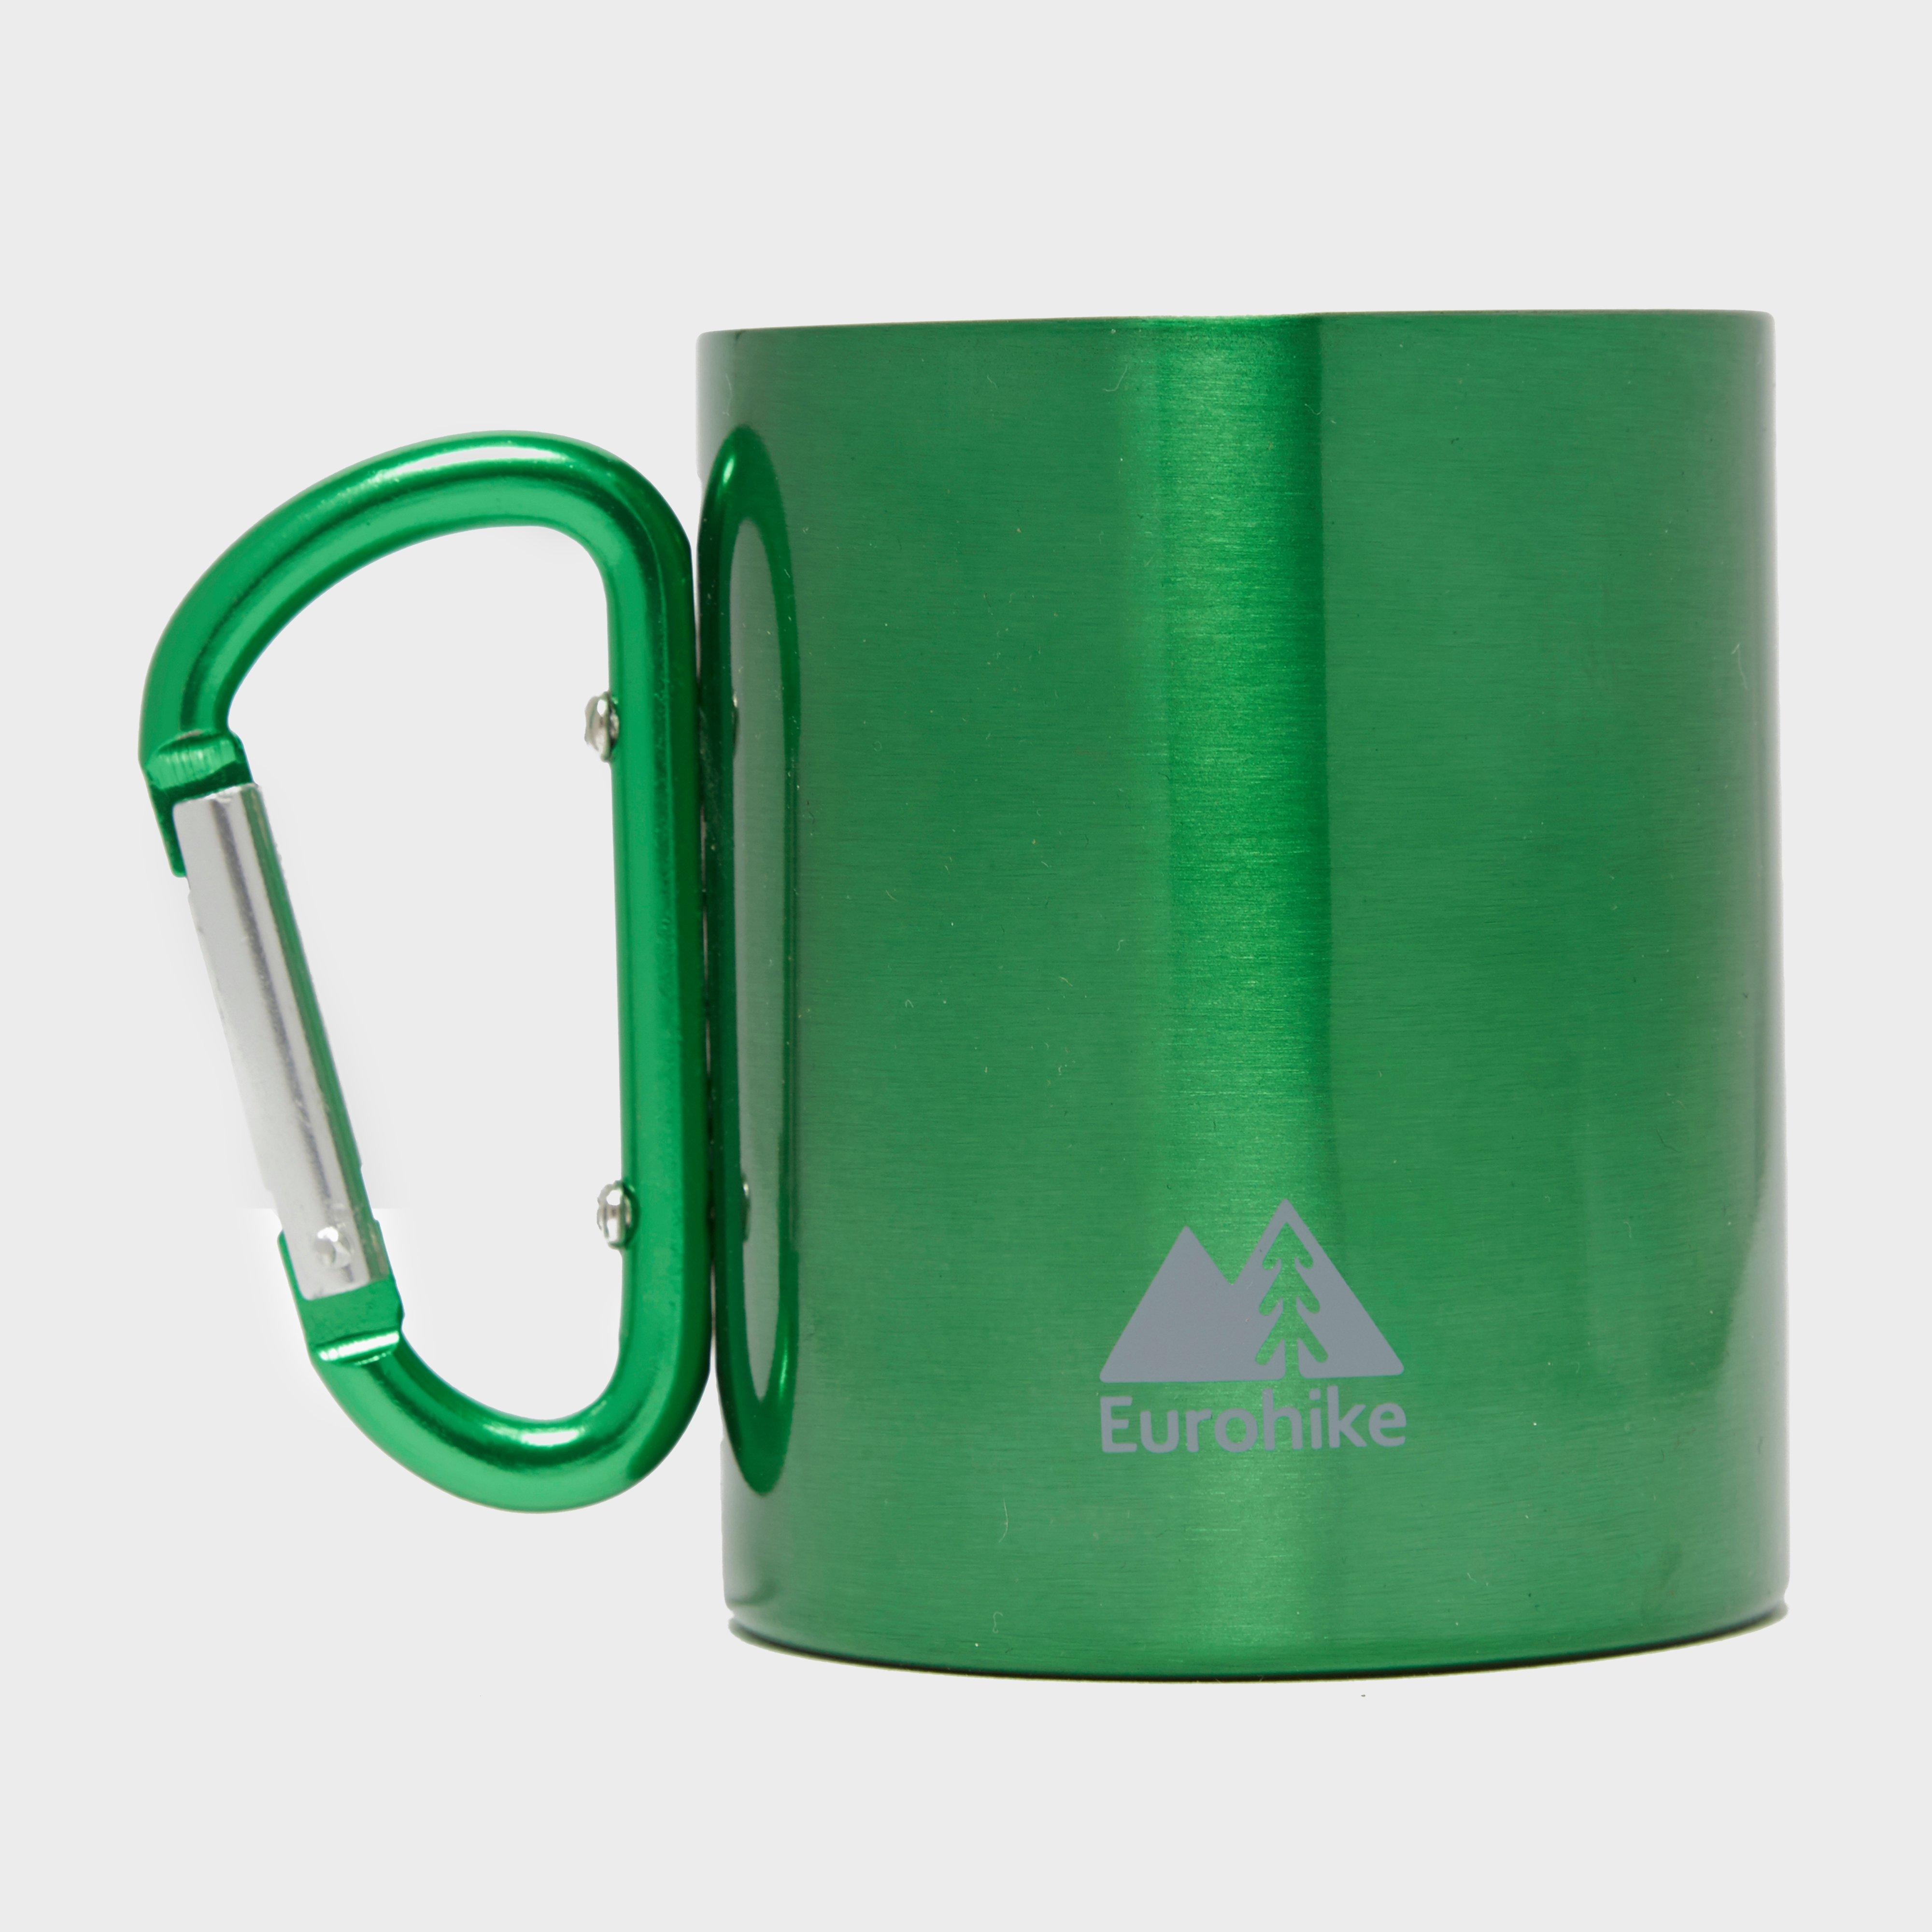 Eurohike Carabiner Handle Mug - Green  Green